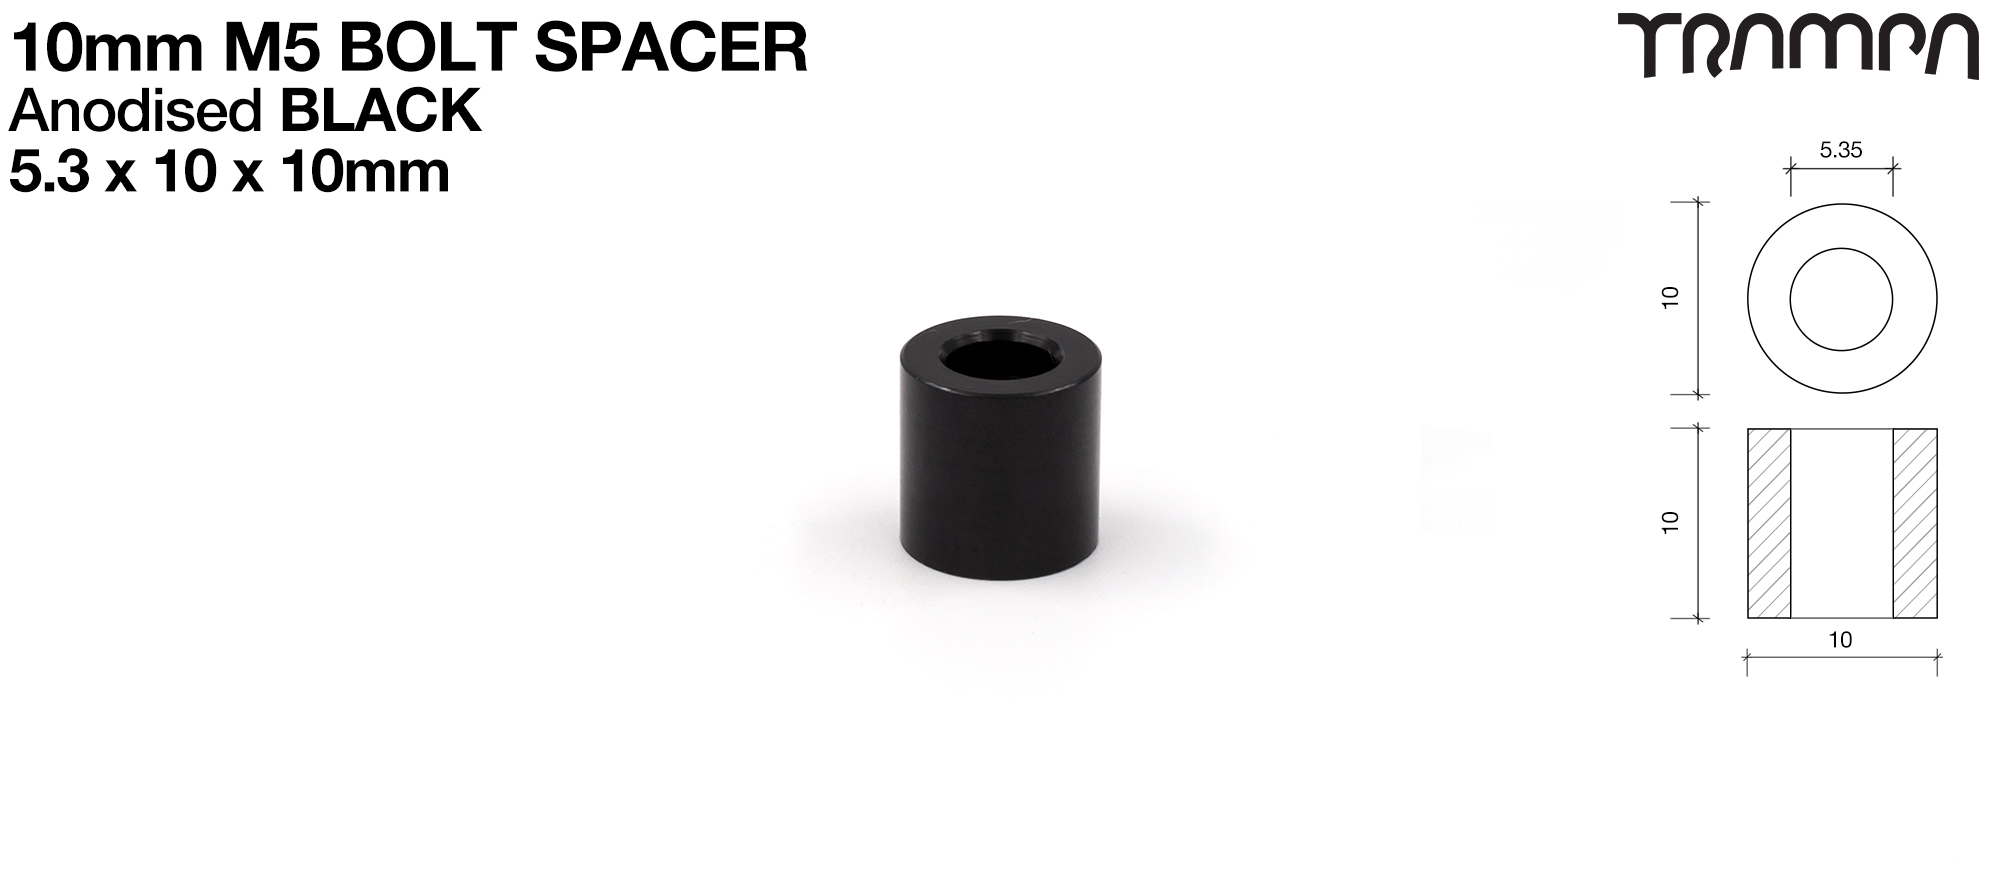 M5 x 10 x 10mm Spacer - Anodised BLACK